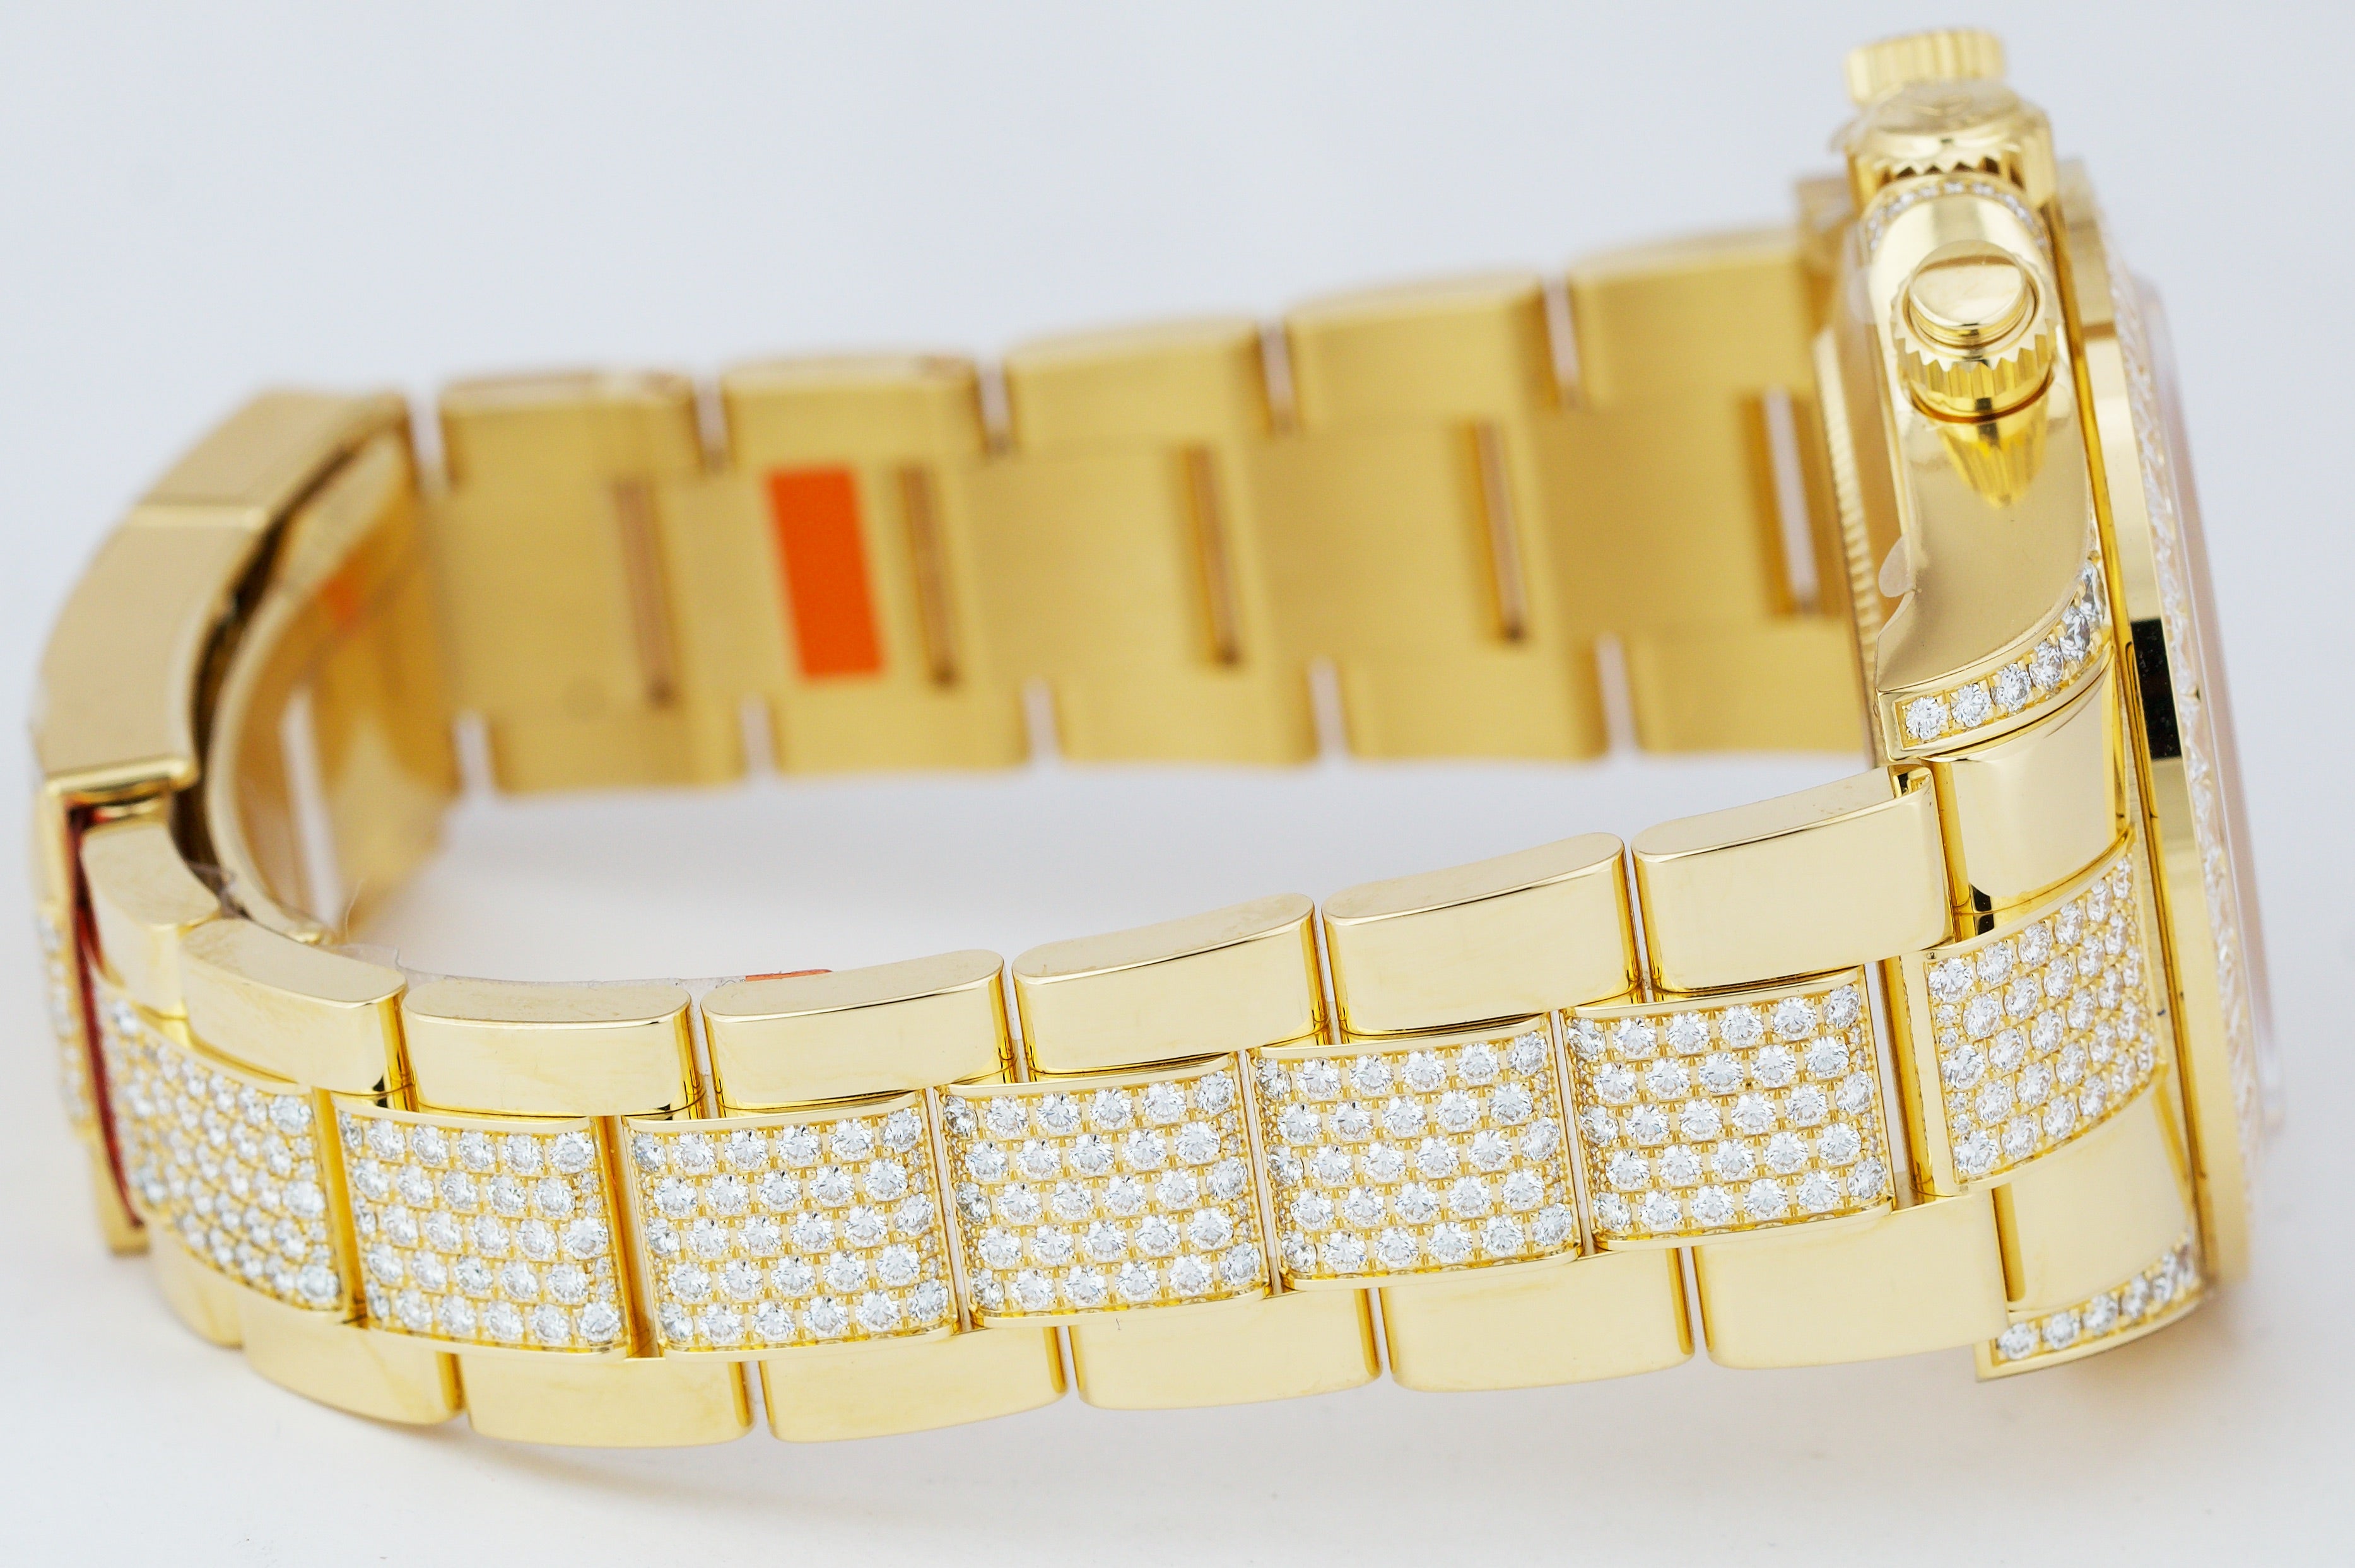 Rolex Daytona Yellow Gold FACTORY DIAMOND 'Eye Of The Tiger' Watch 116598 TBR